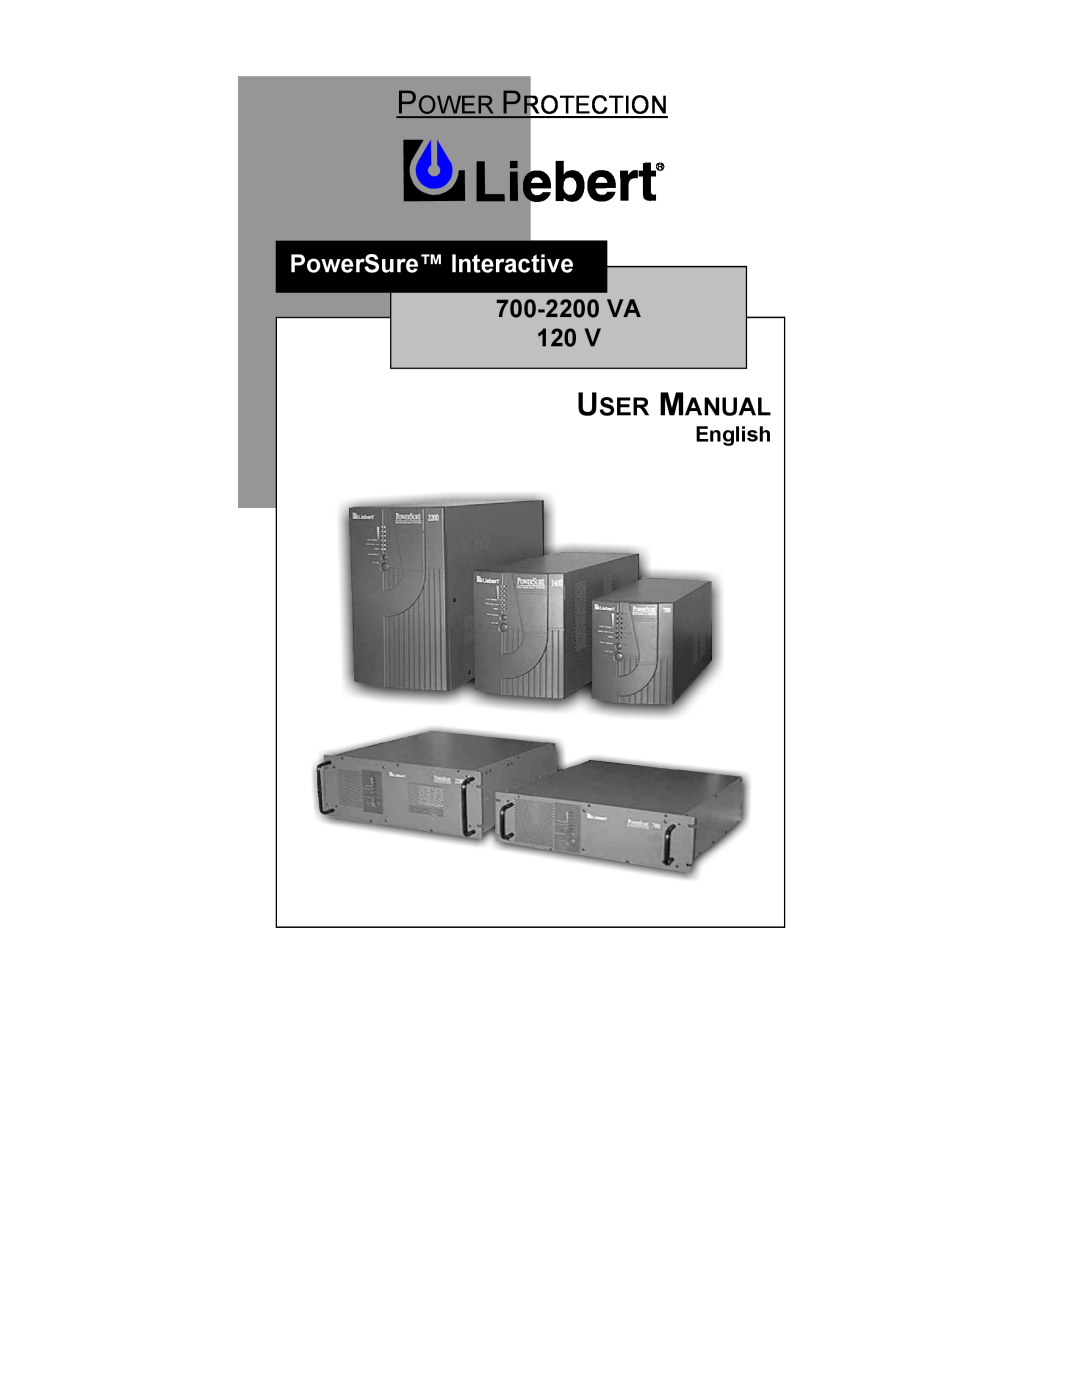 Liebert user manual PowerSure Interactive, 700-2200 VA 120 USER MANUAL, English, Power Protection 